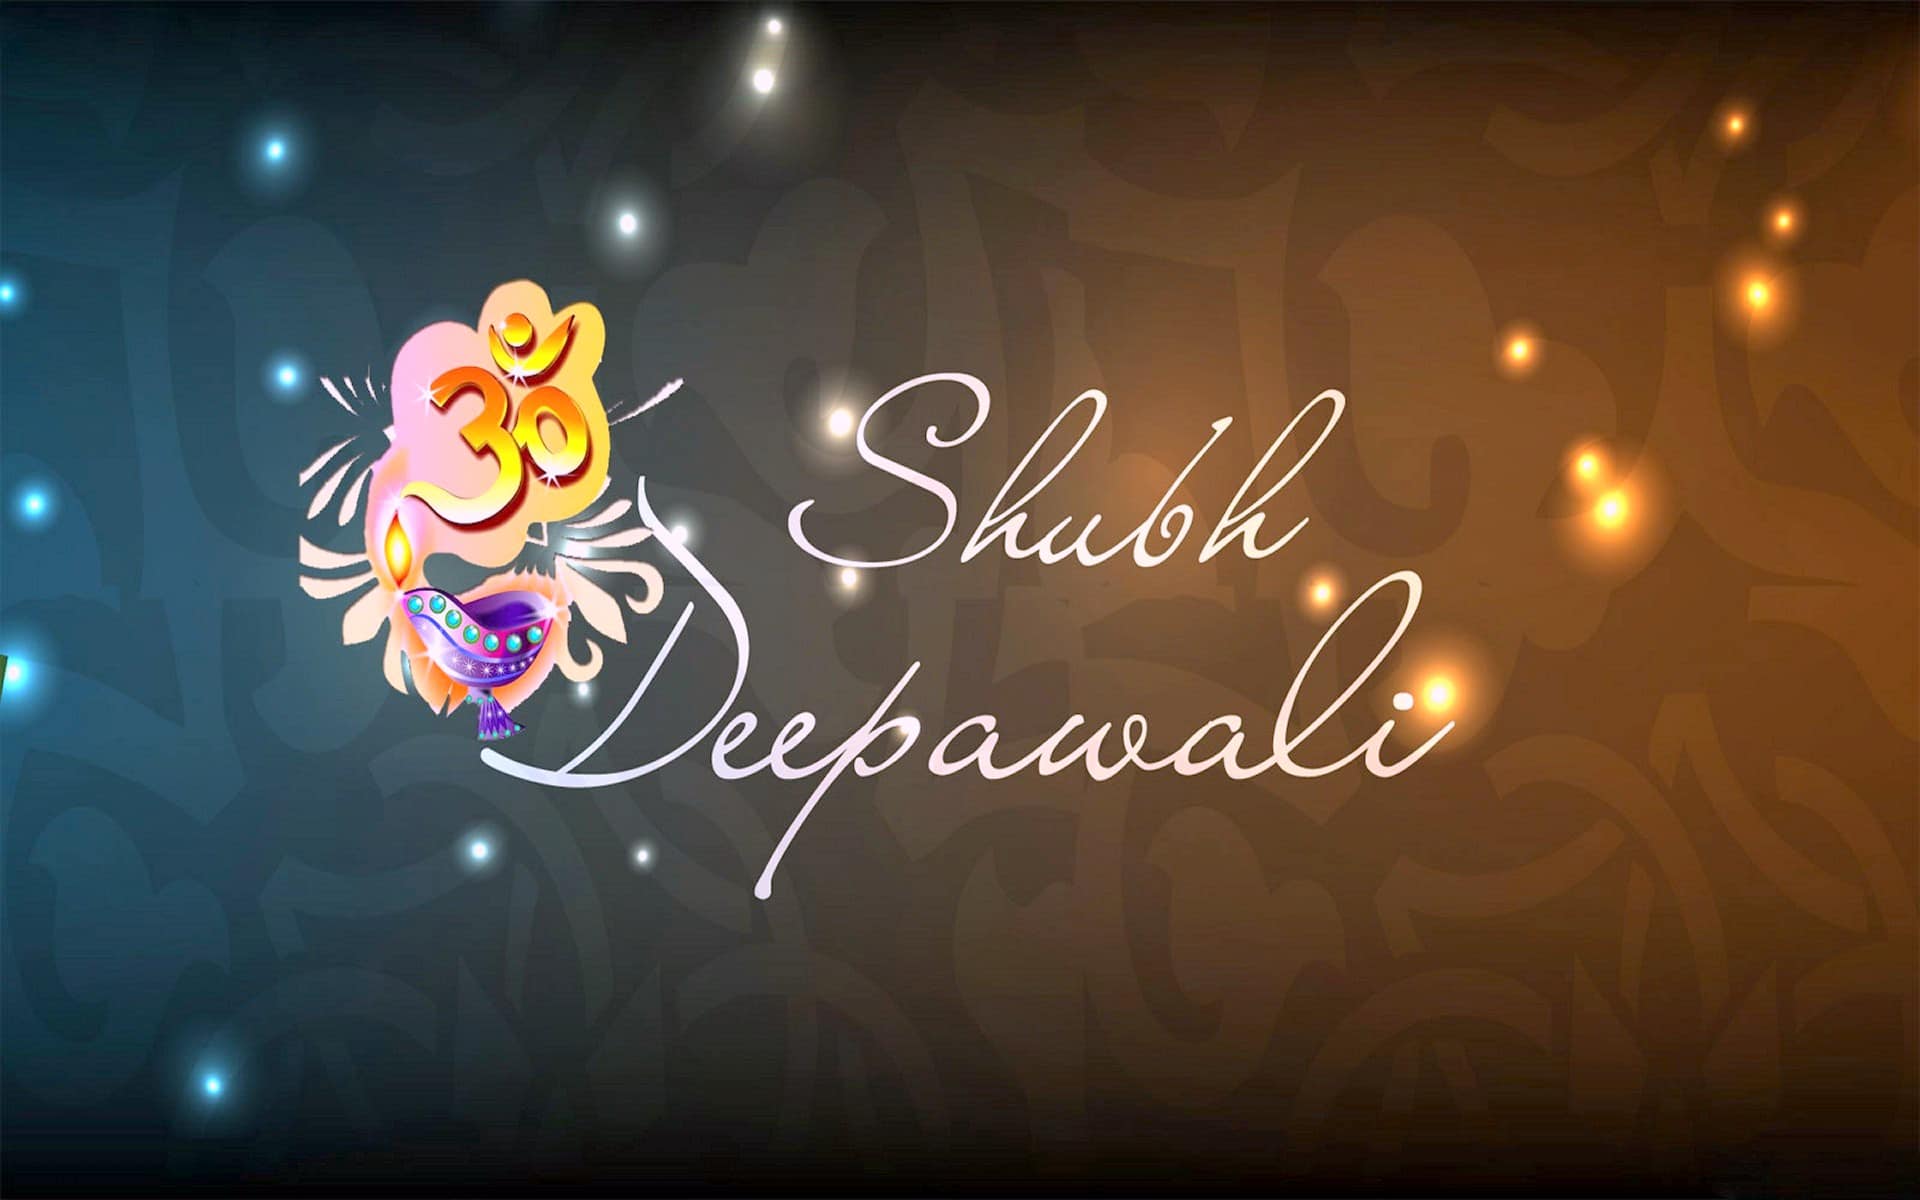 Shubh Deepawali Wallpaper